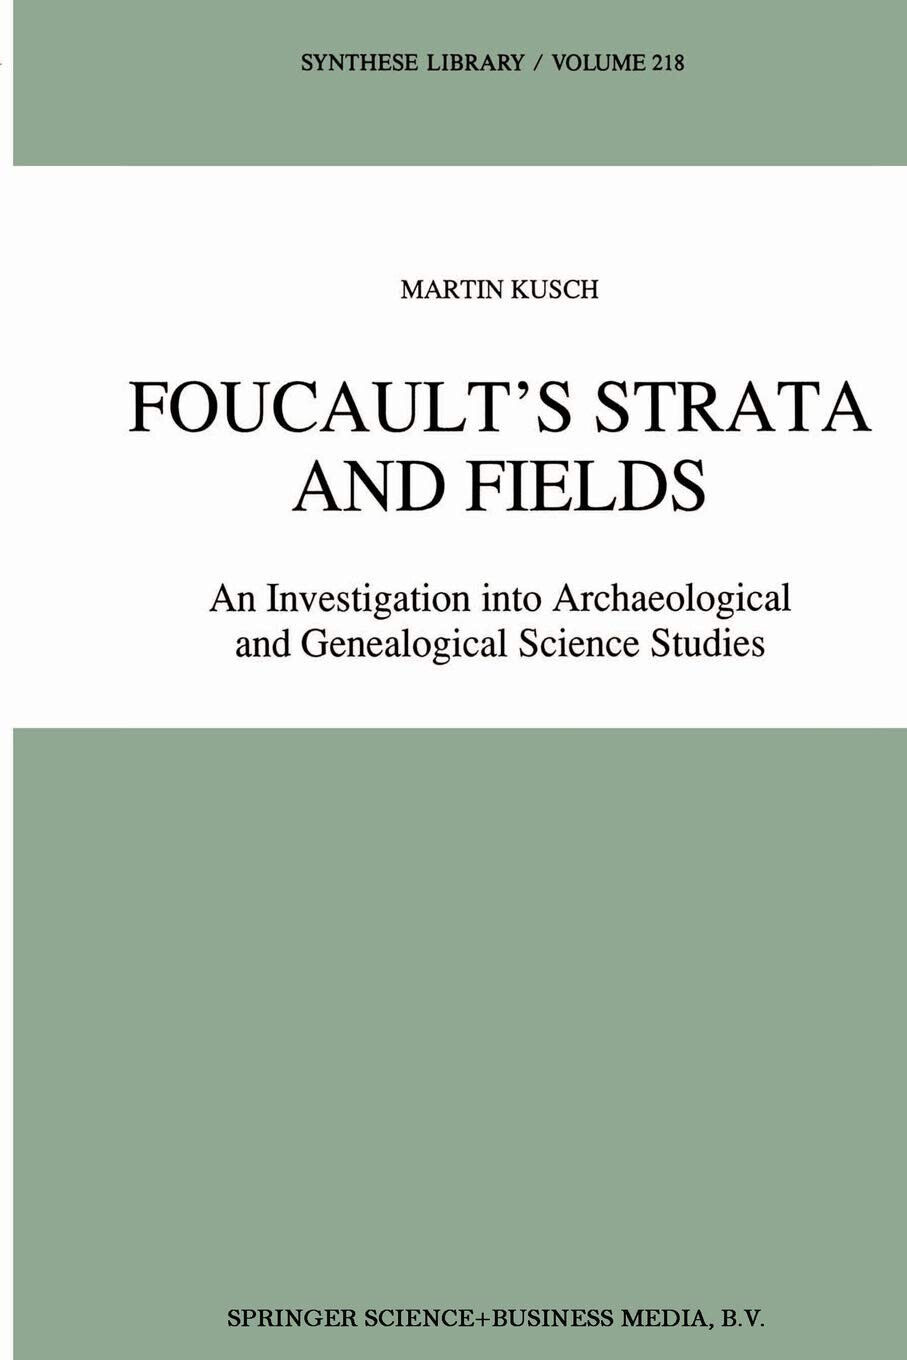 Foucault s Strata and Fields - Maren Kusch - Springer, 2013